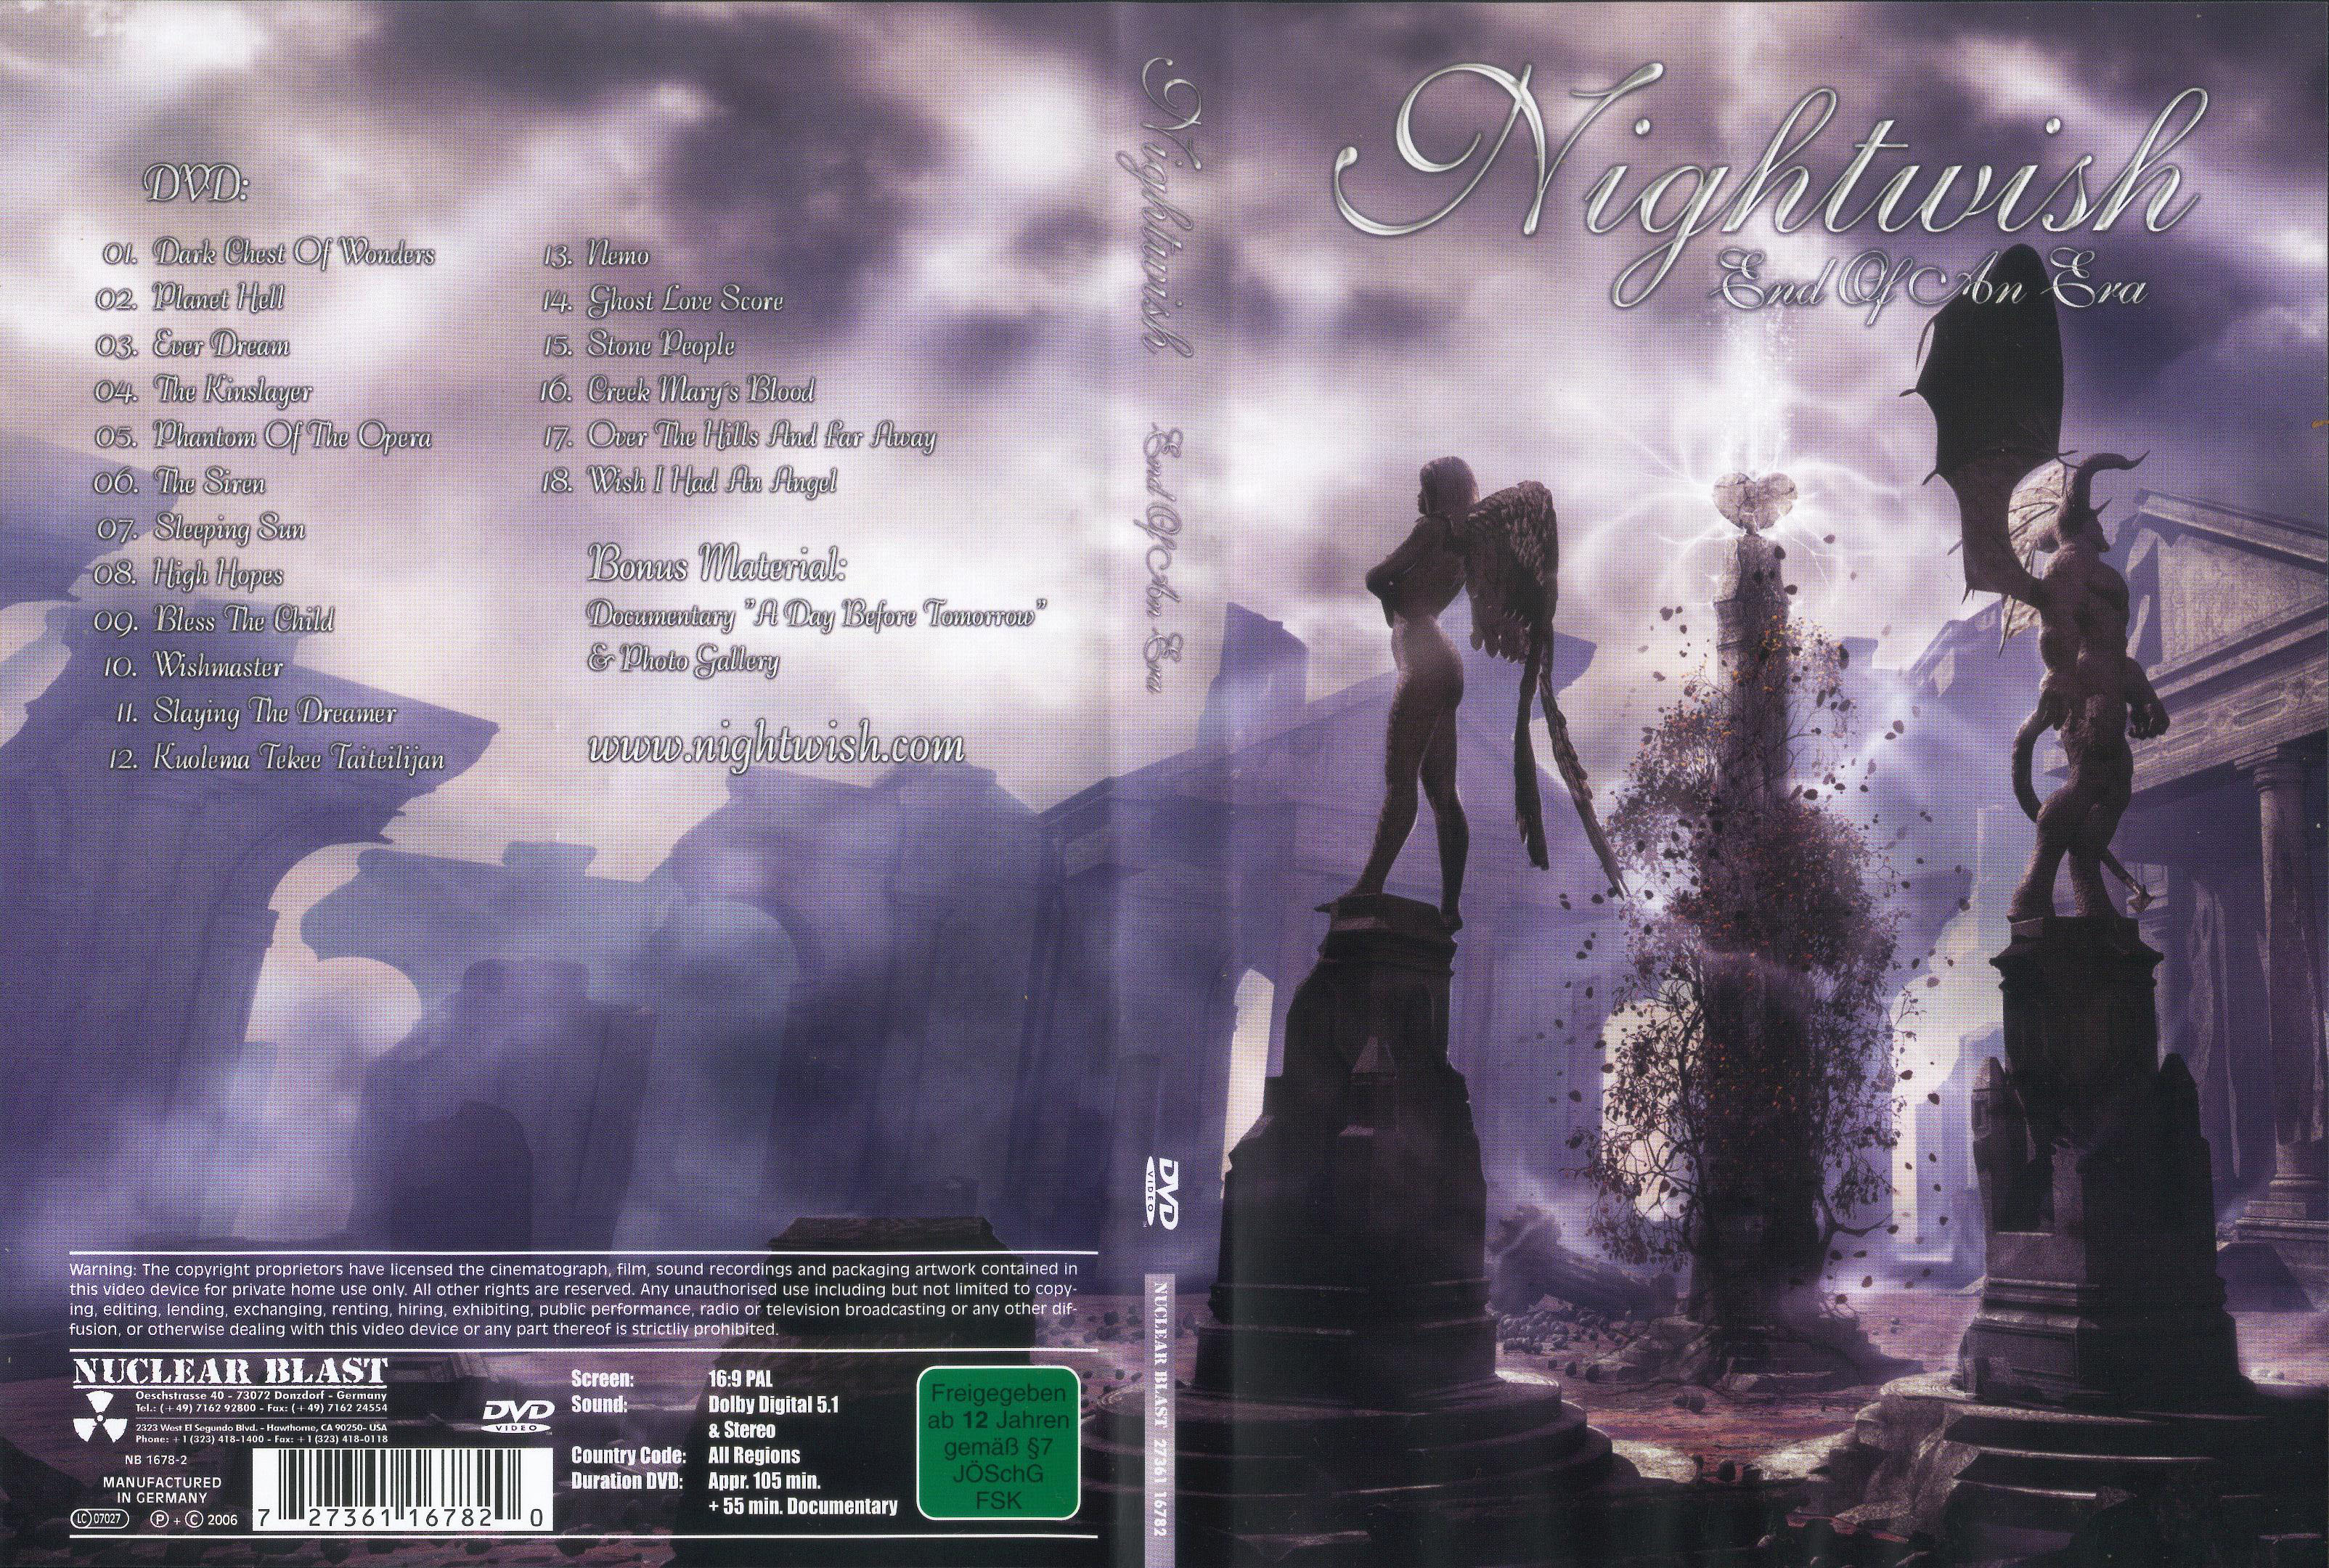 Jaquette DVD Nightwish End of an era